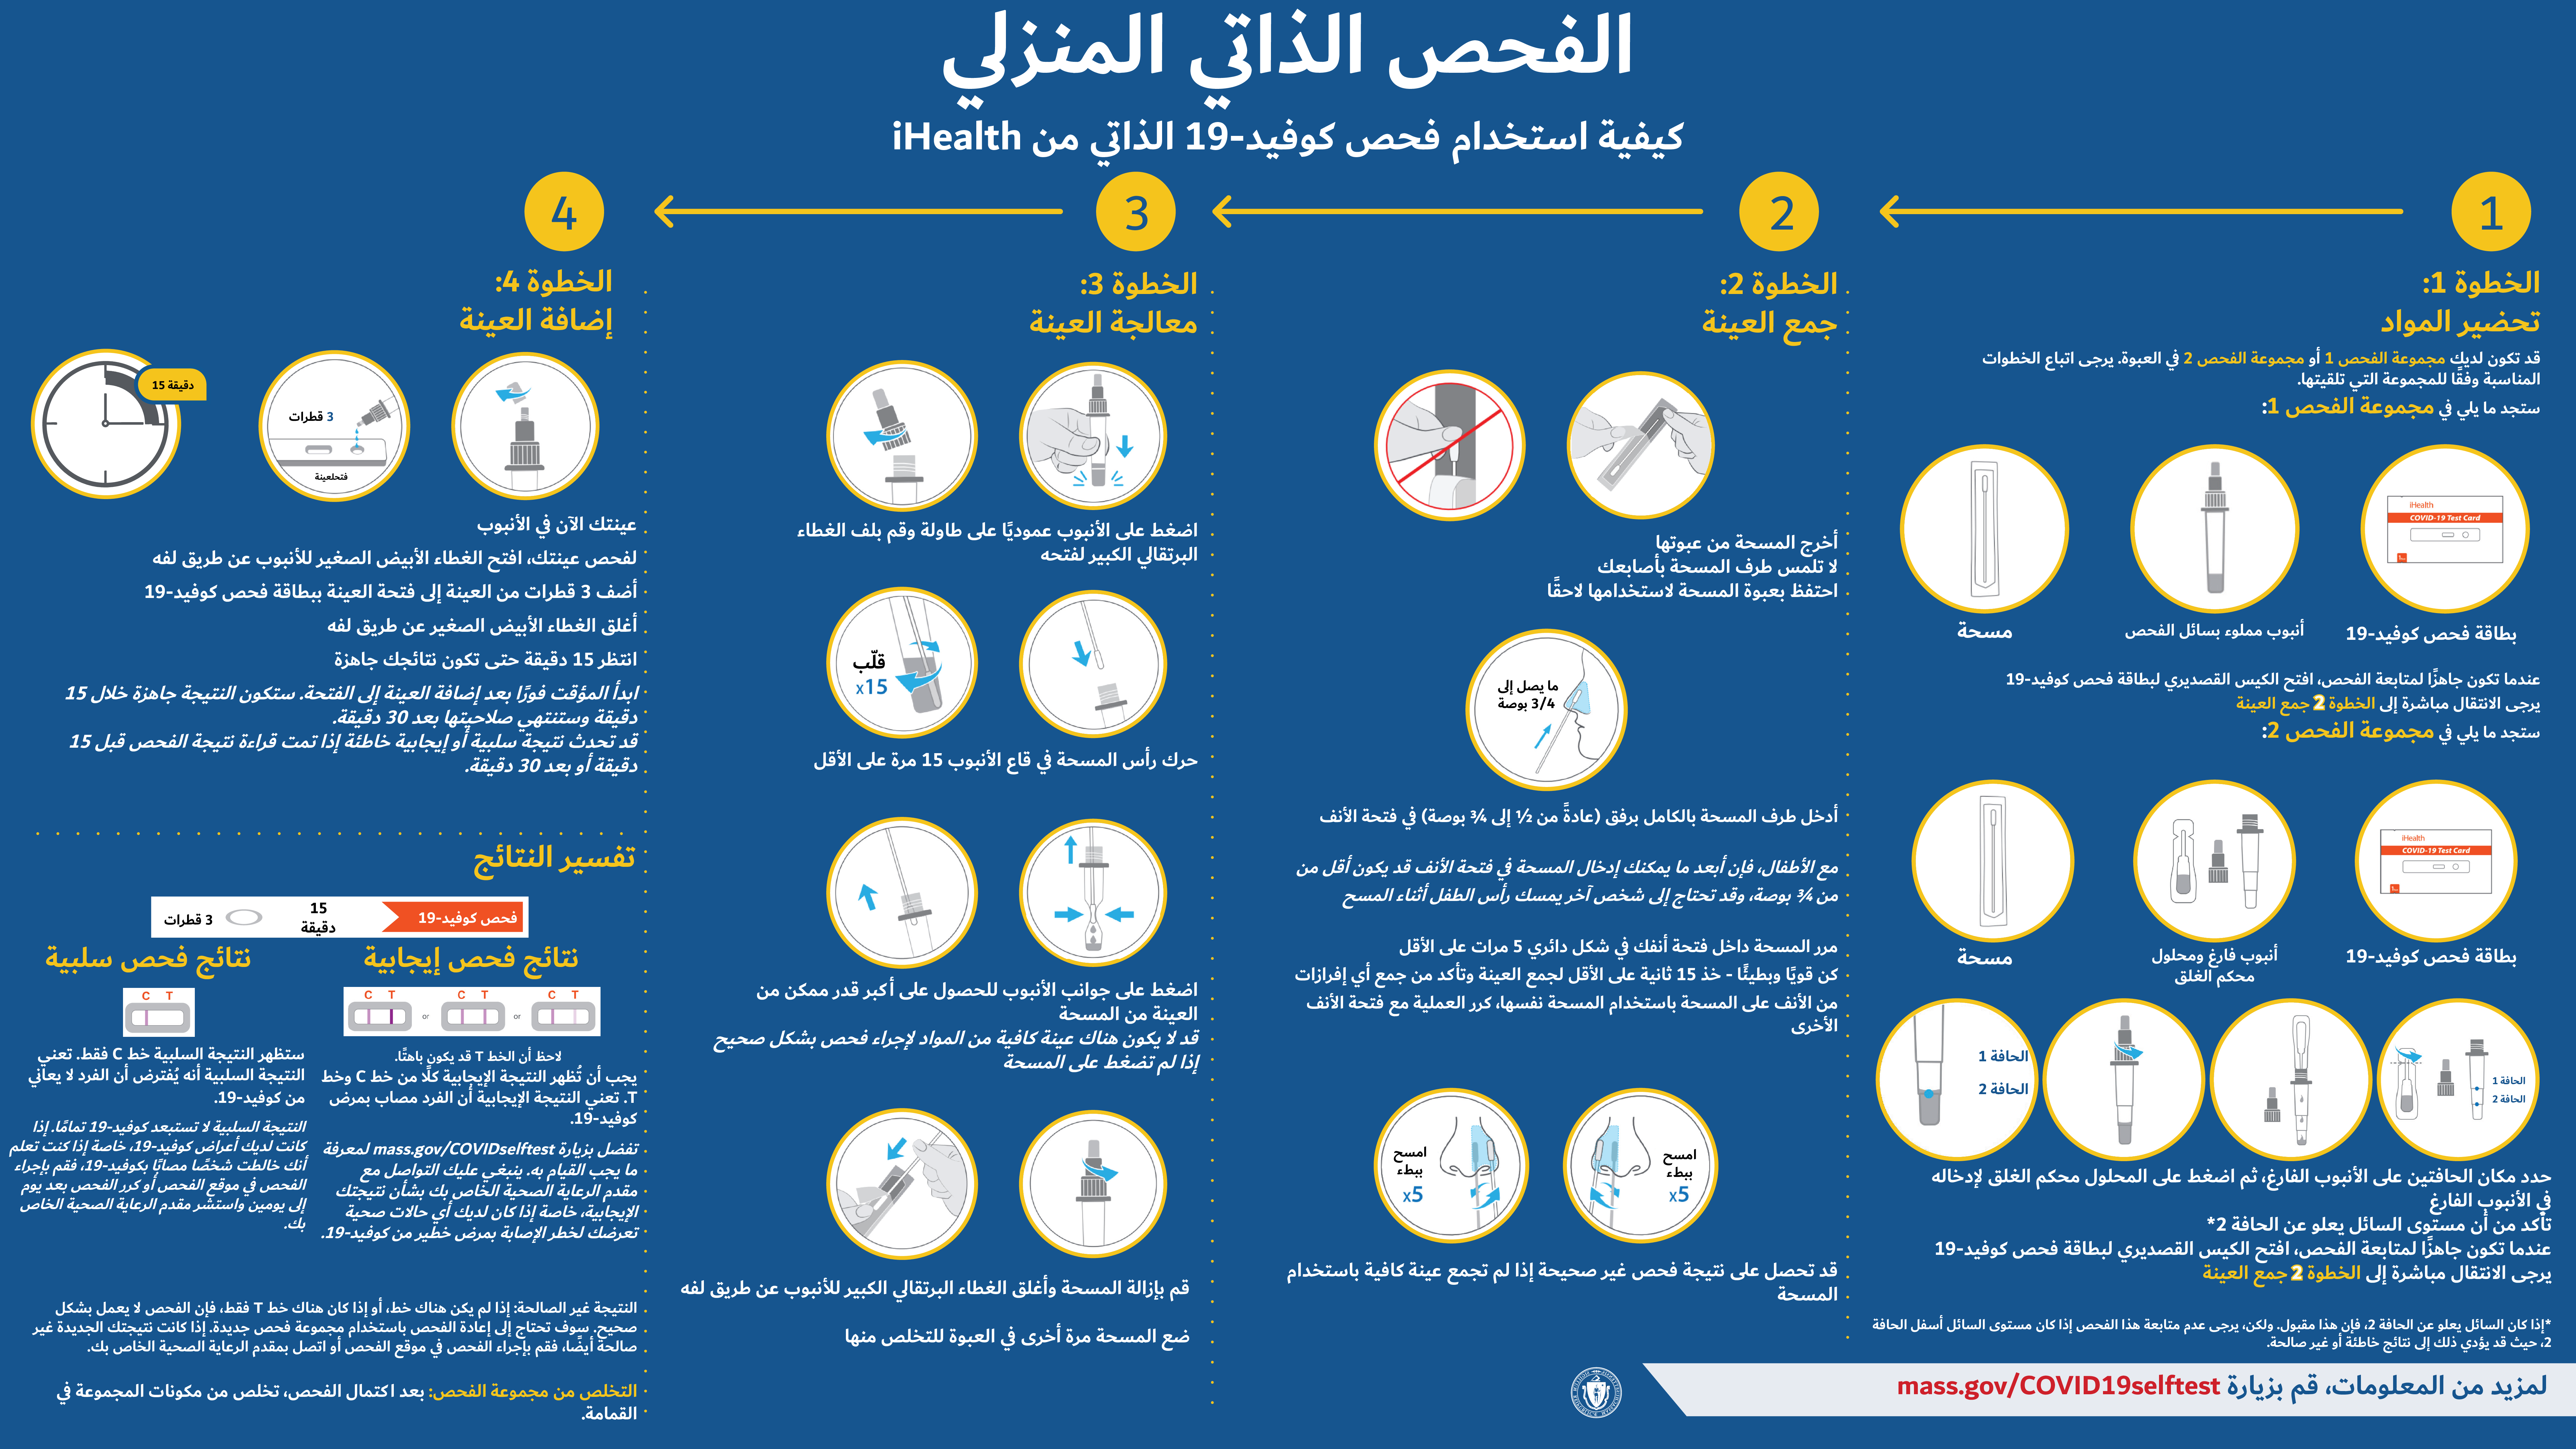 Full color Arabic COVID-19 Self-Test Instruction Sheet